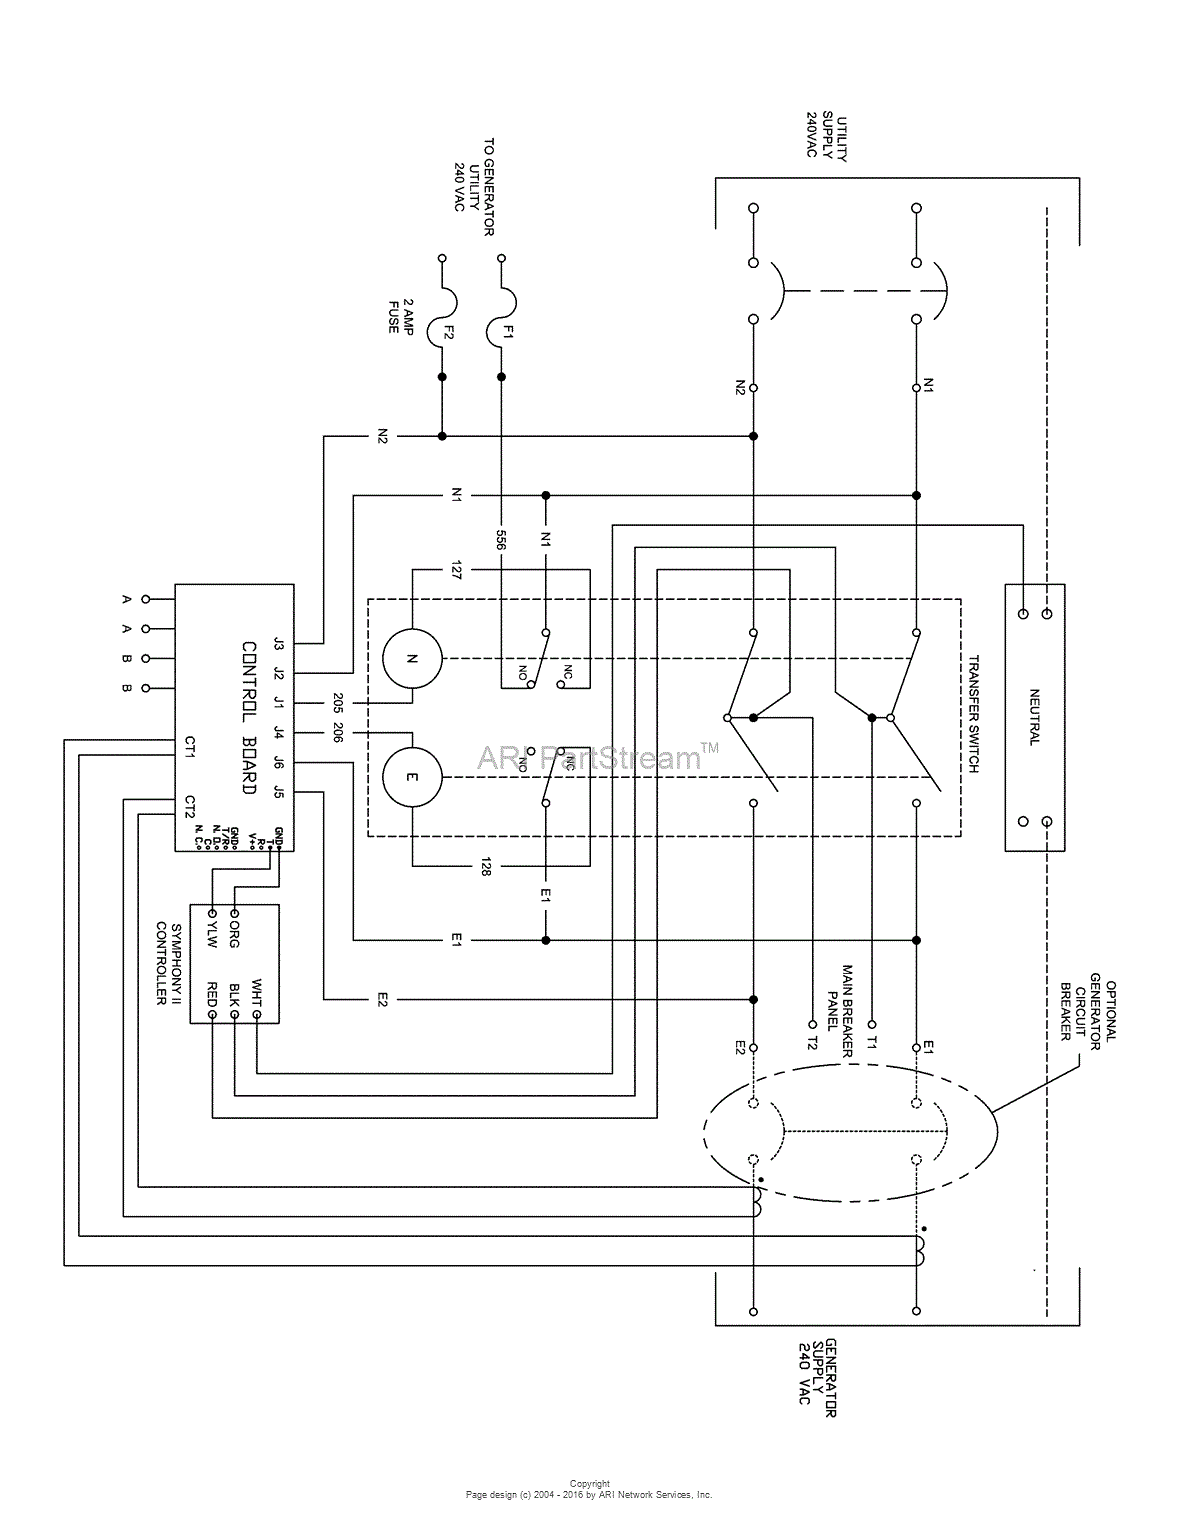 Generac 7.5 Kw Generator Wiring Diagram generator wiring diagram 